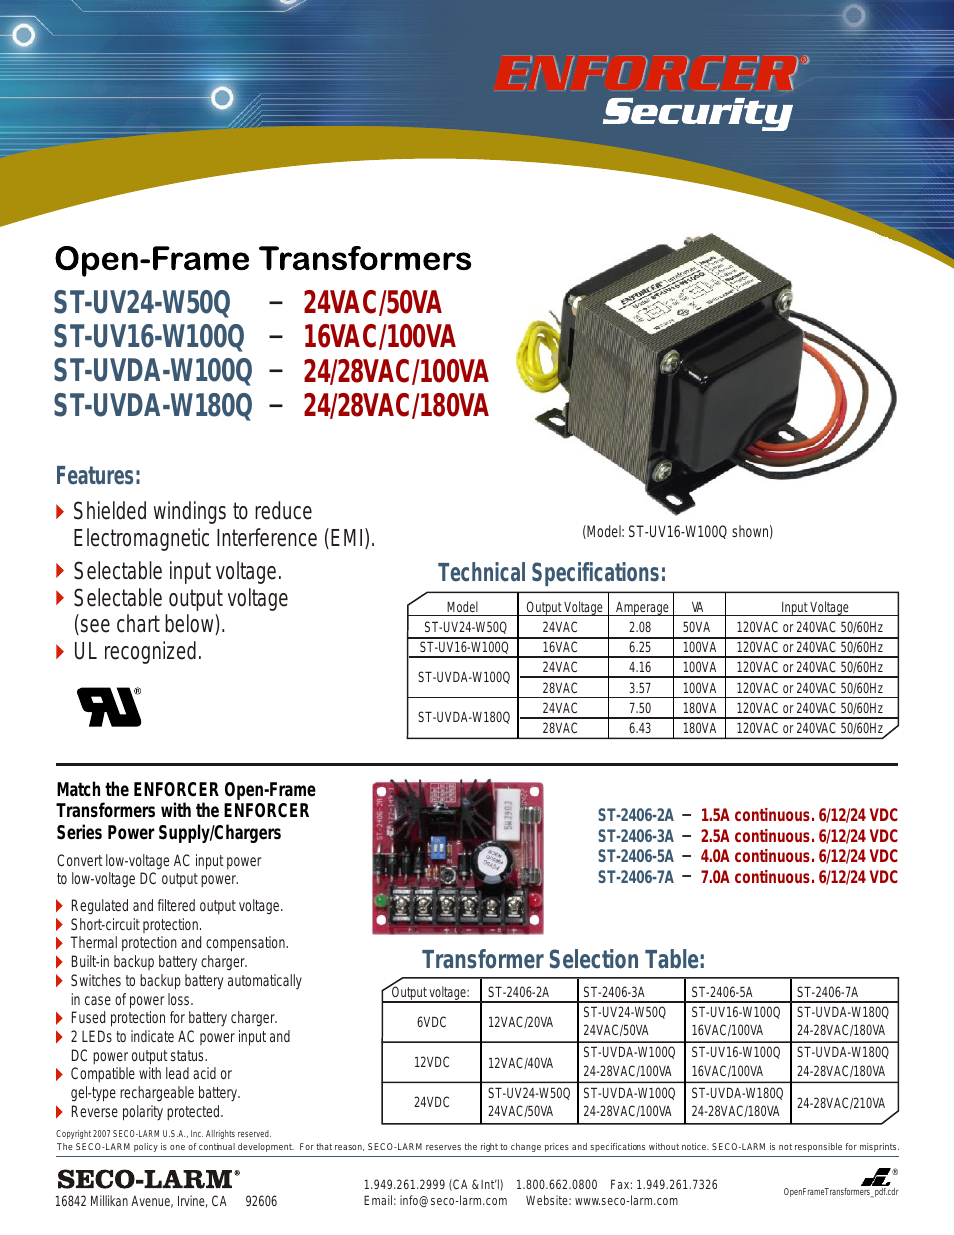 Open-Frame Transformers ST-UVDA-W180Q